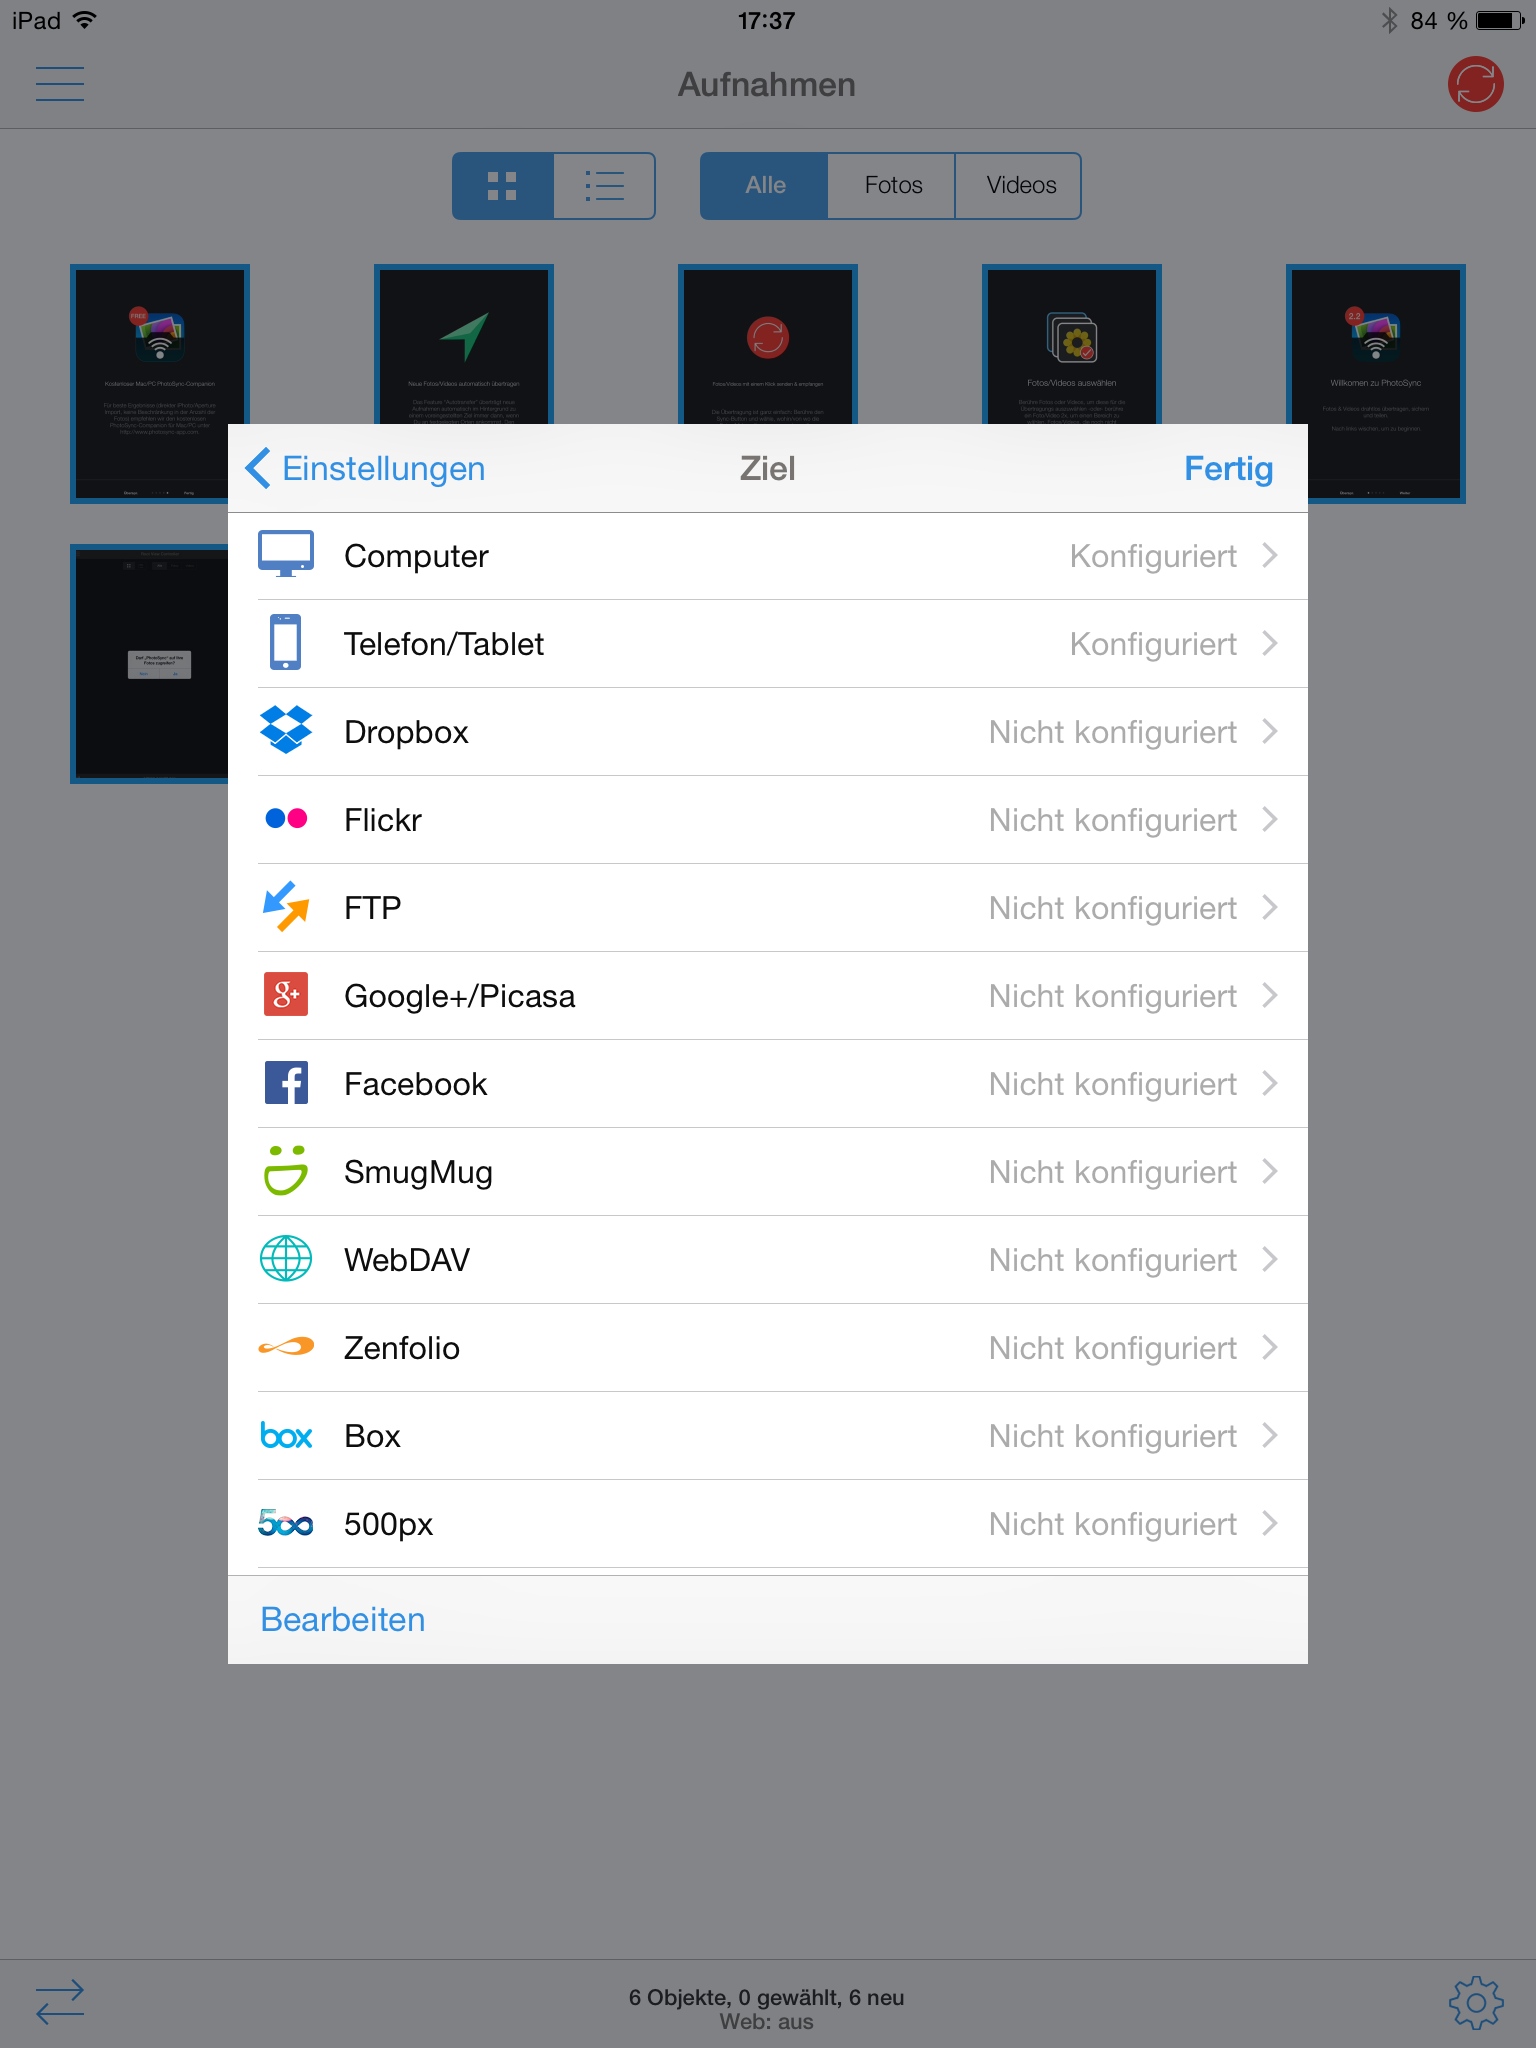 iOS (iPhone + iPad) - Bilder ohne iTunes per WLAN syncronisieren 3